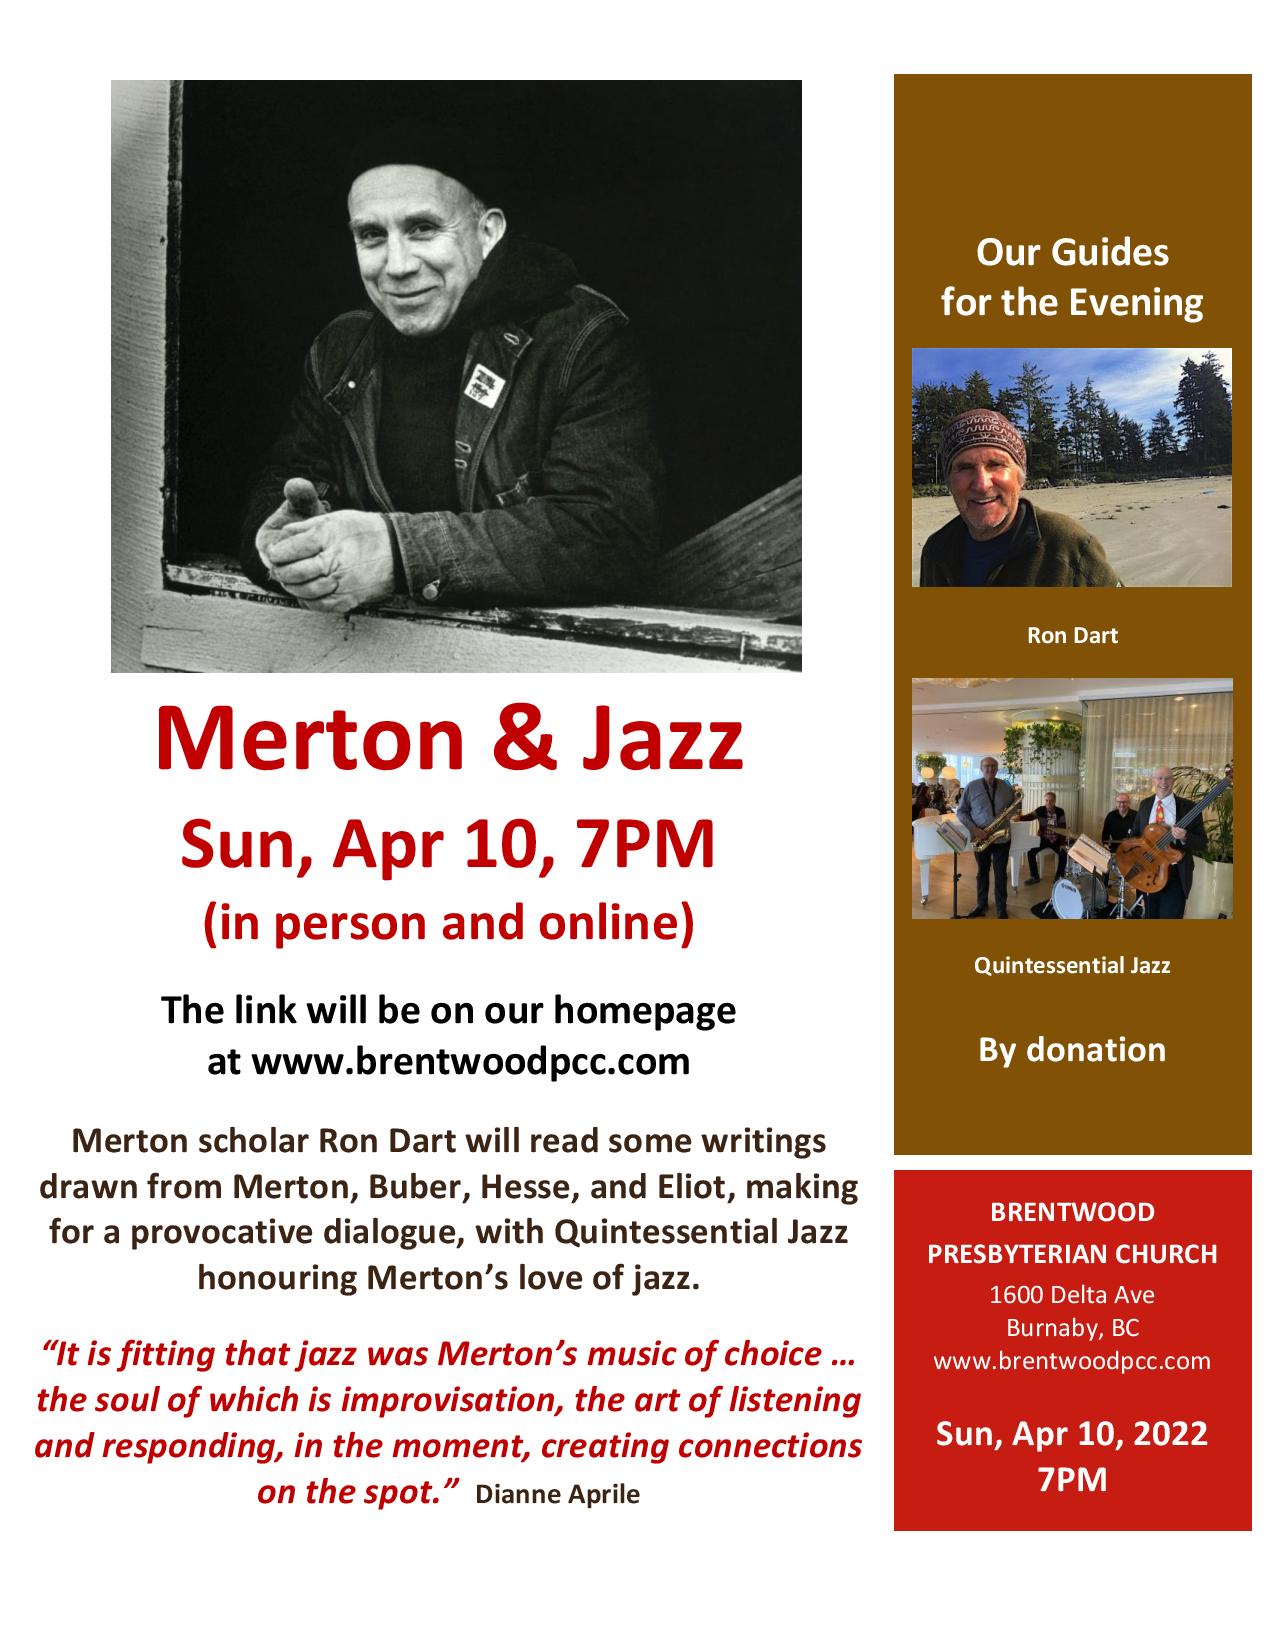 Merton & Jazz event poster, April 10